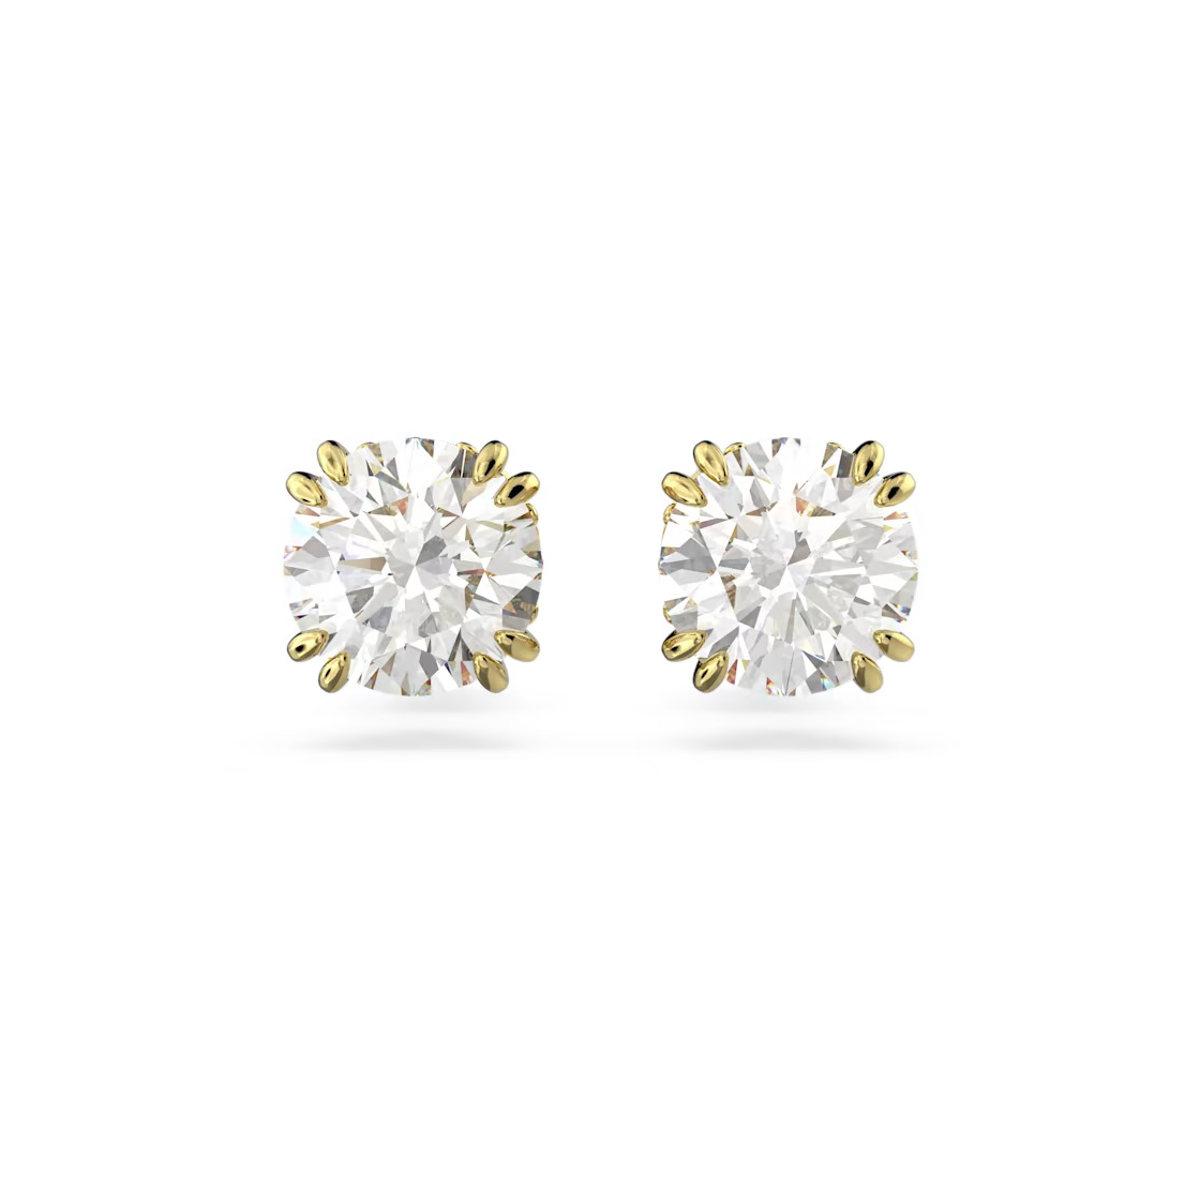 SWAROVSKI earrings 5642595